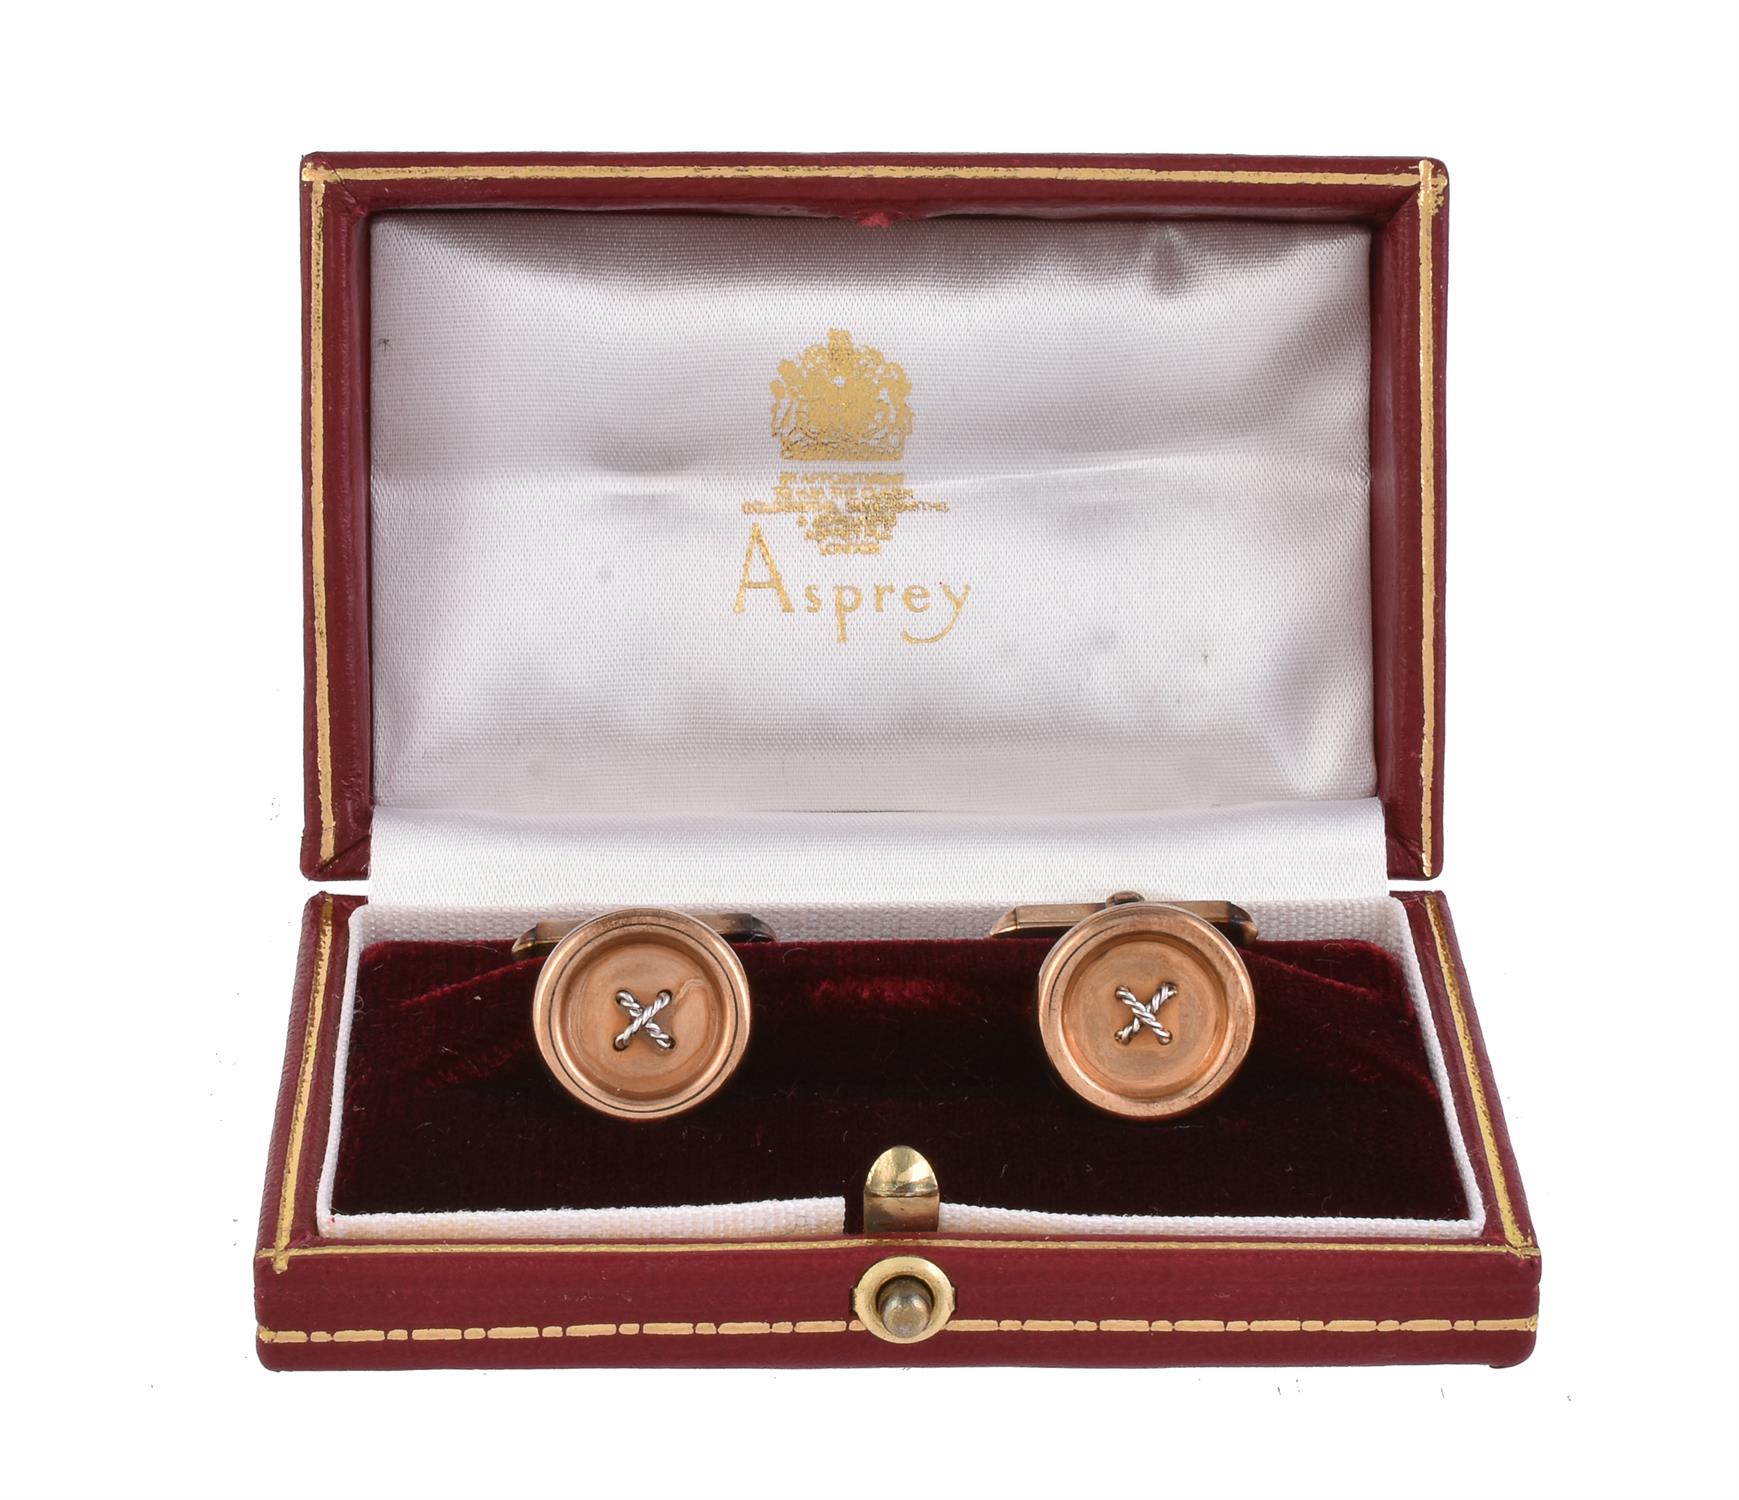 A pair of 9 carat gold Asprey cufflinks